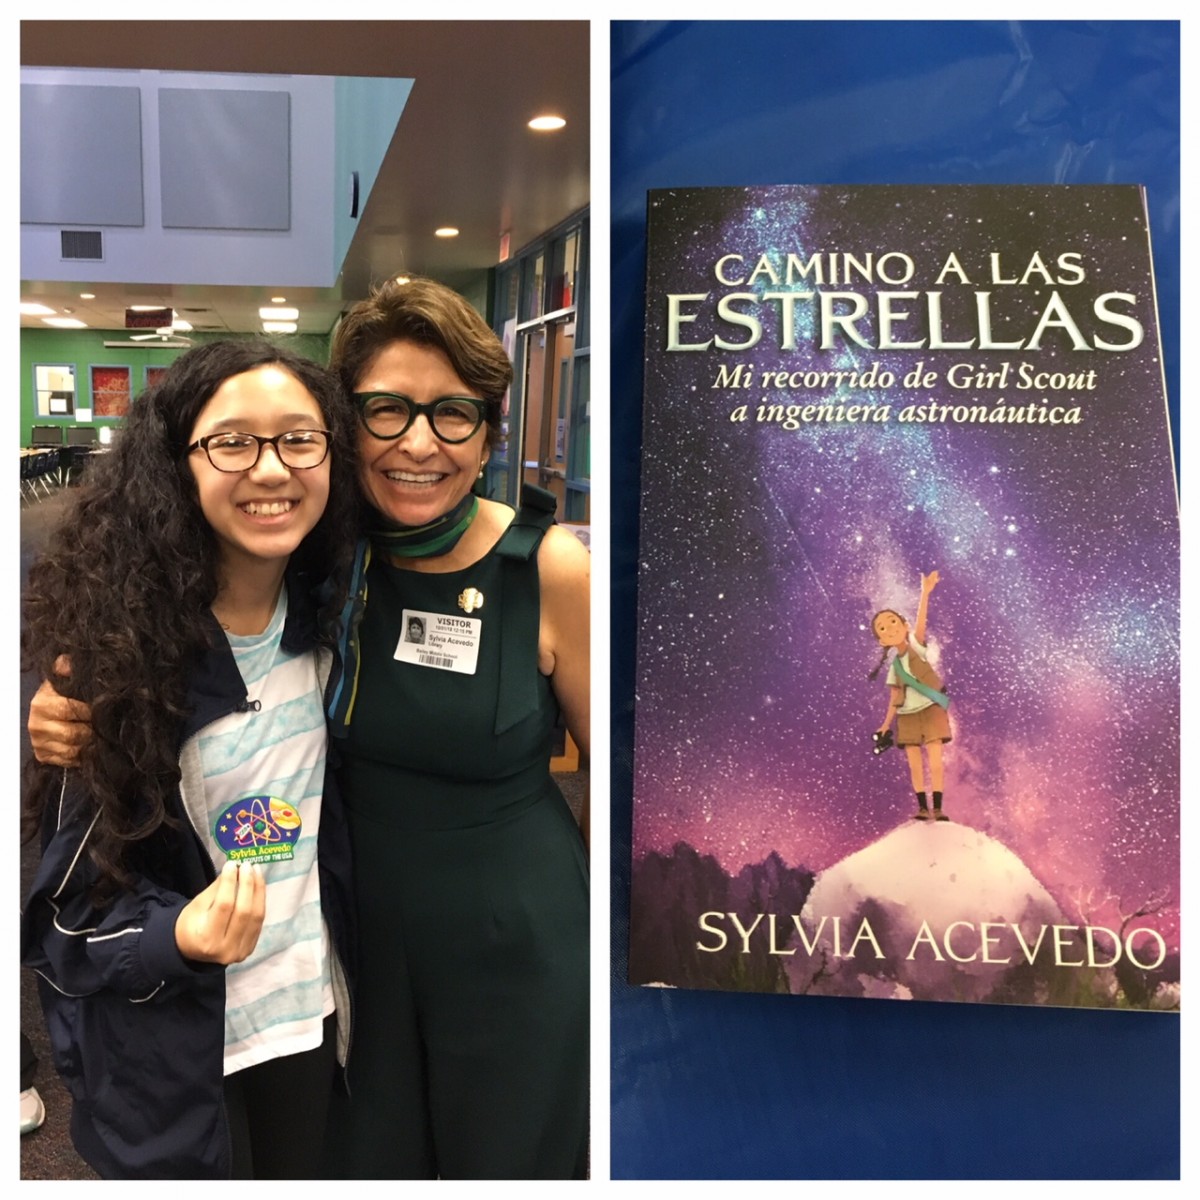 Author Sylvia Acevedo visits Bailey